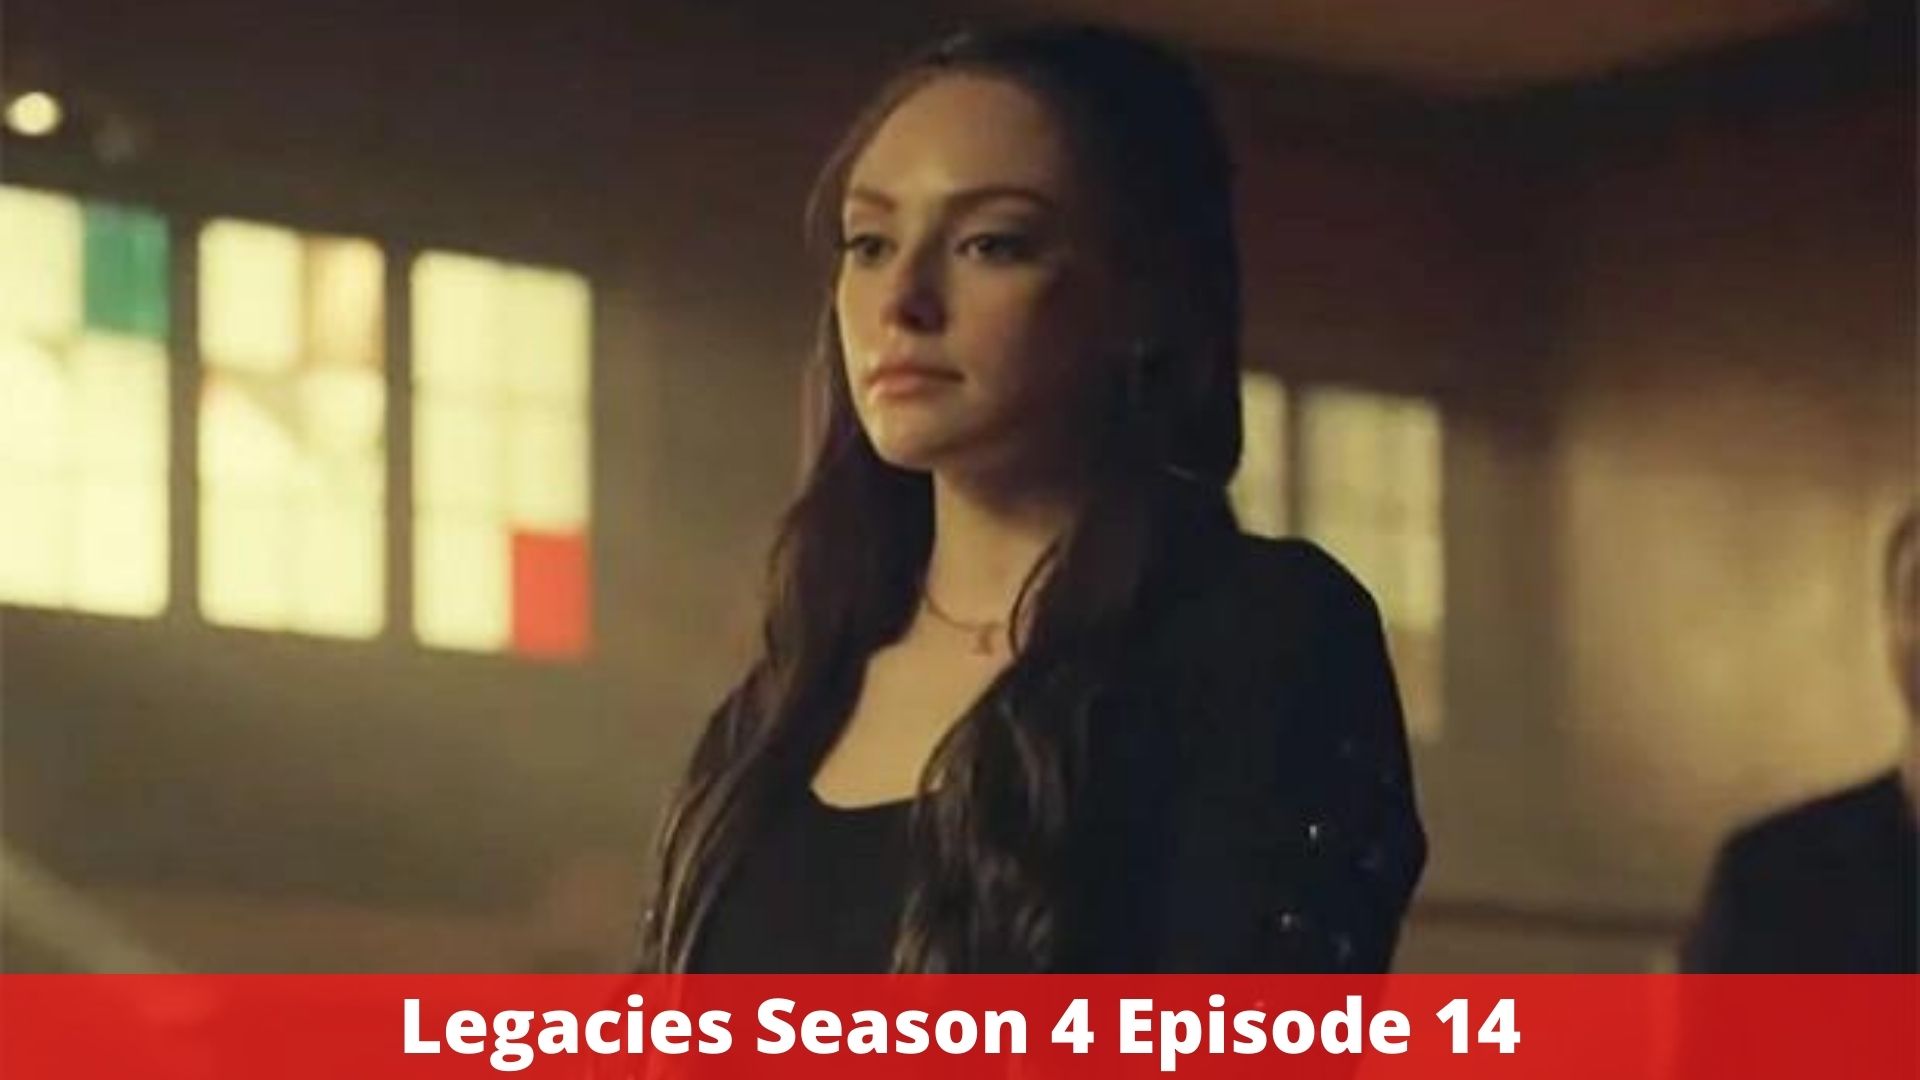 Legacies Season 4 Episode 14 - Release Date, Recap 4 Episode 13, And More!